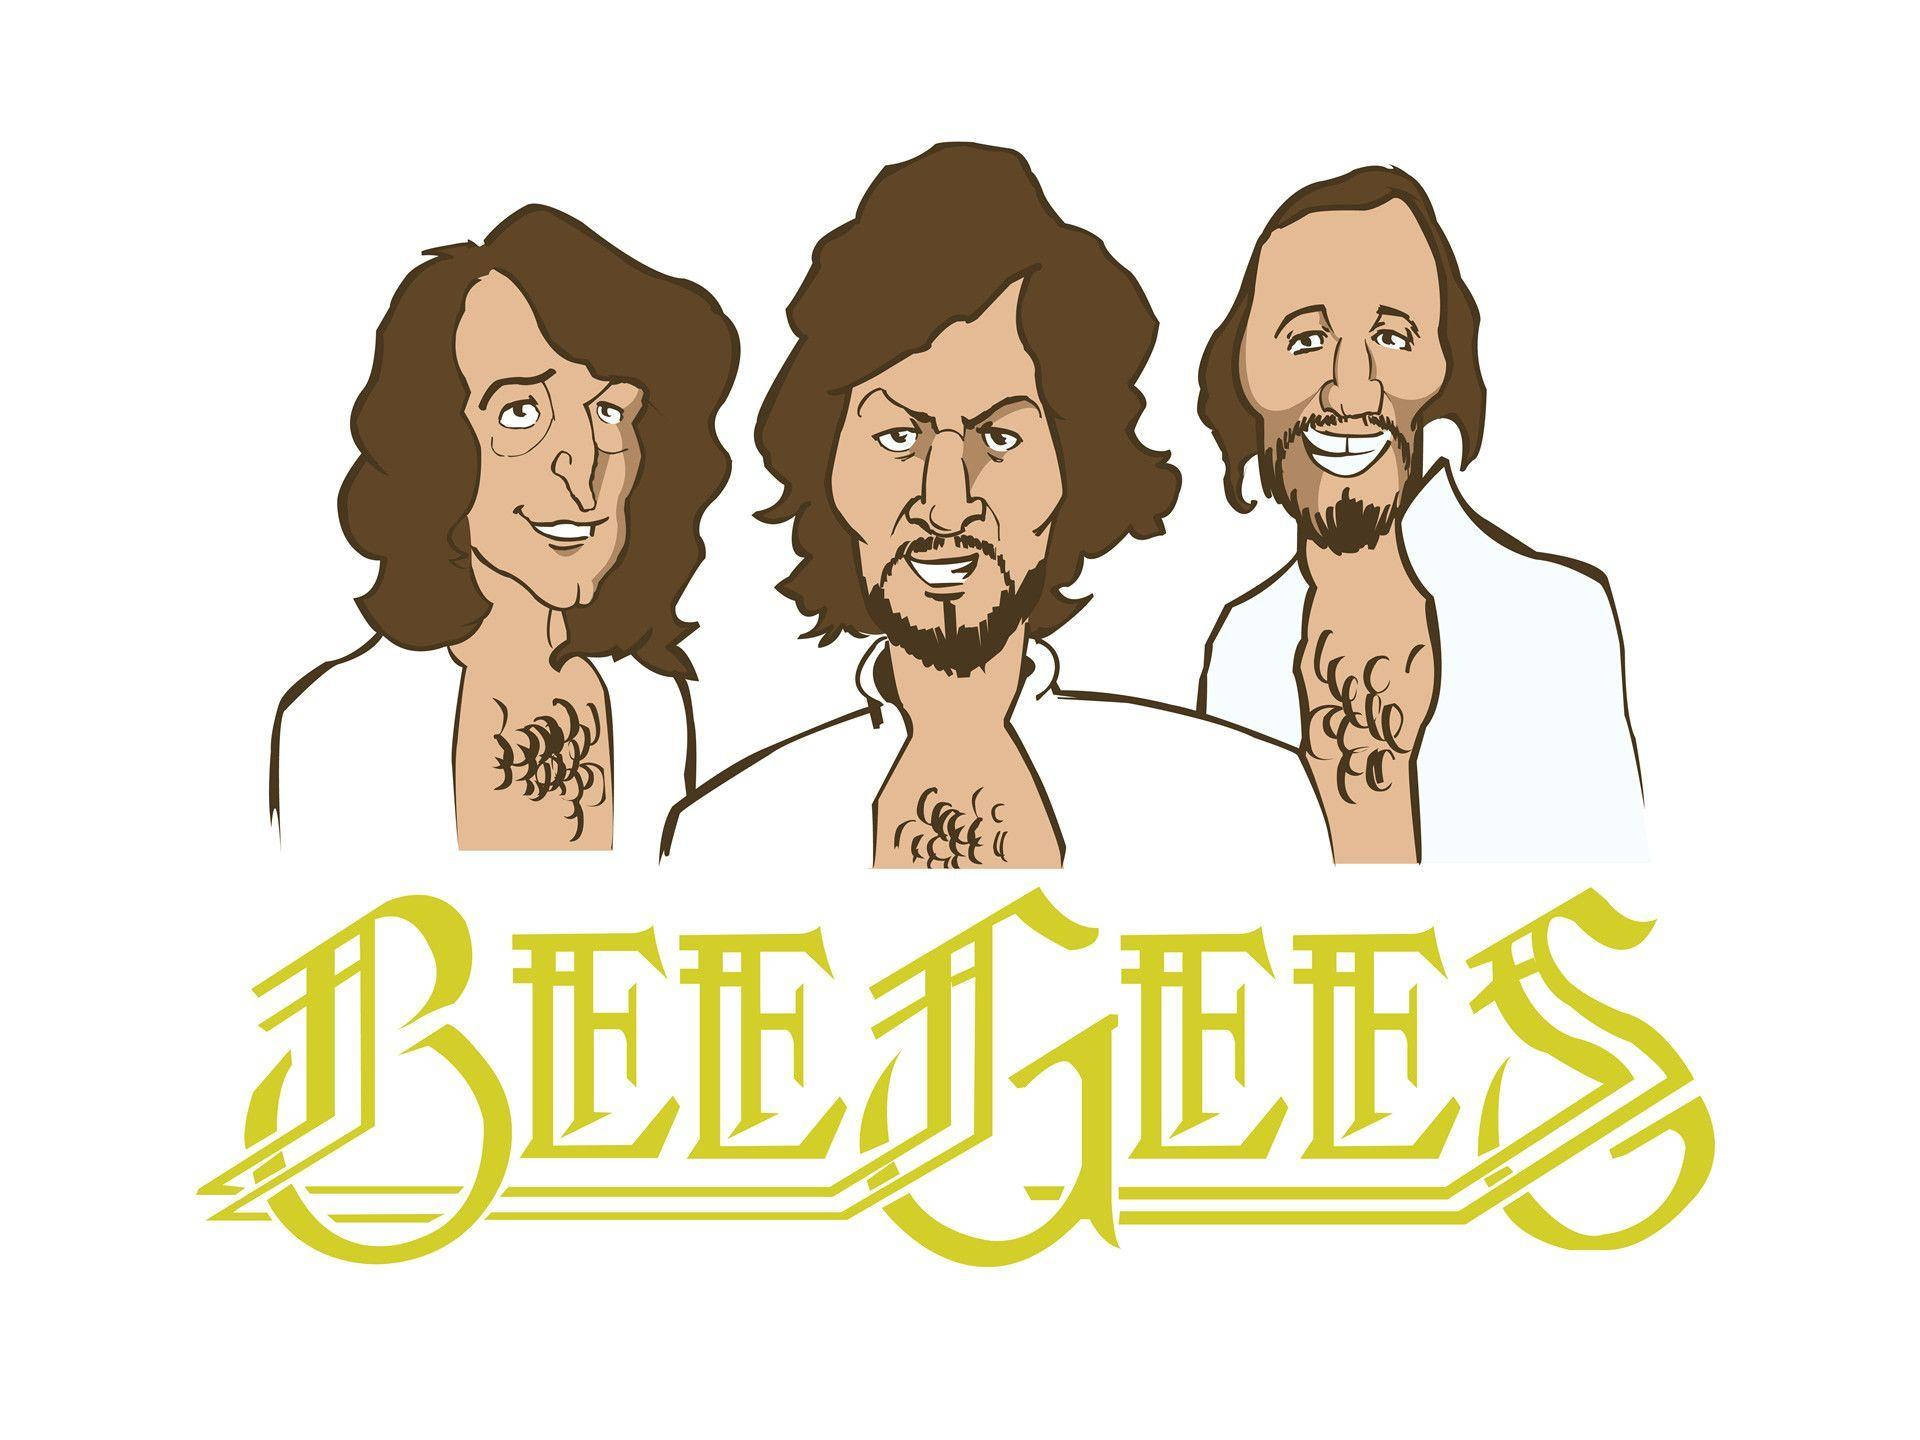 Bee Gees Musical Group Vector Art Wallpaper